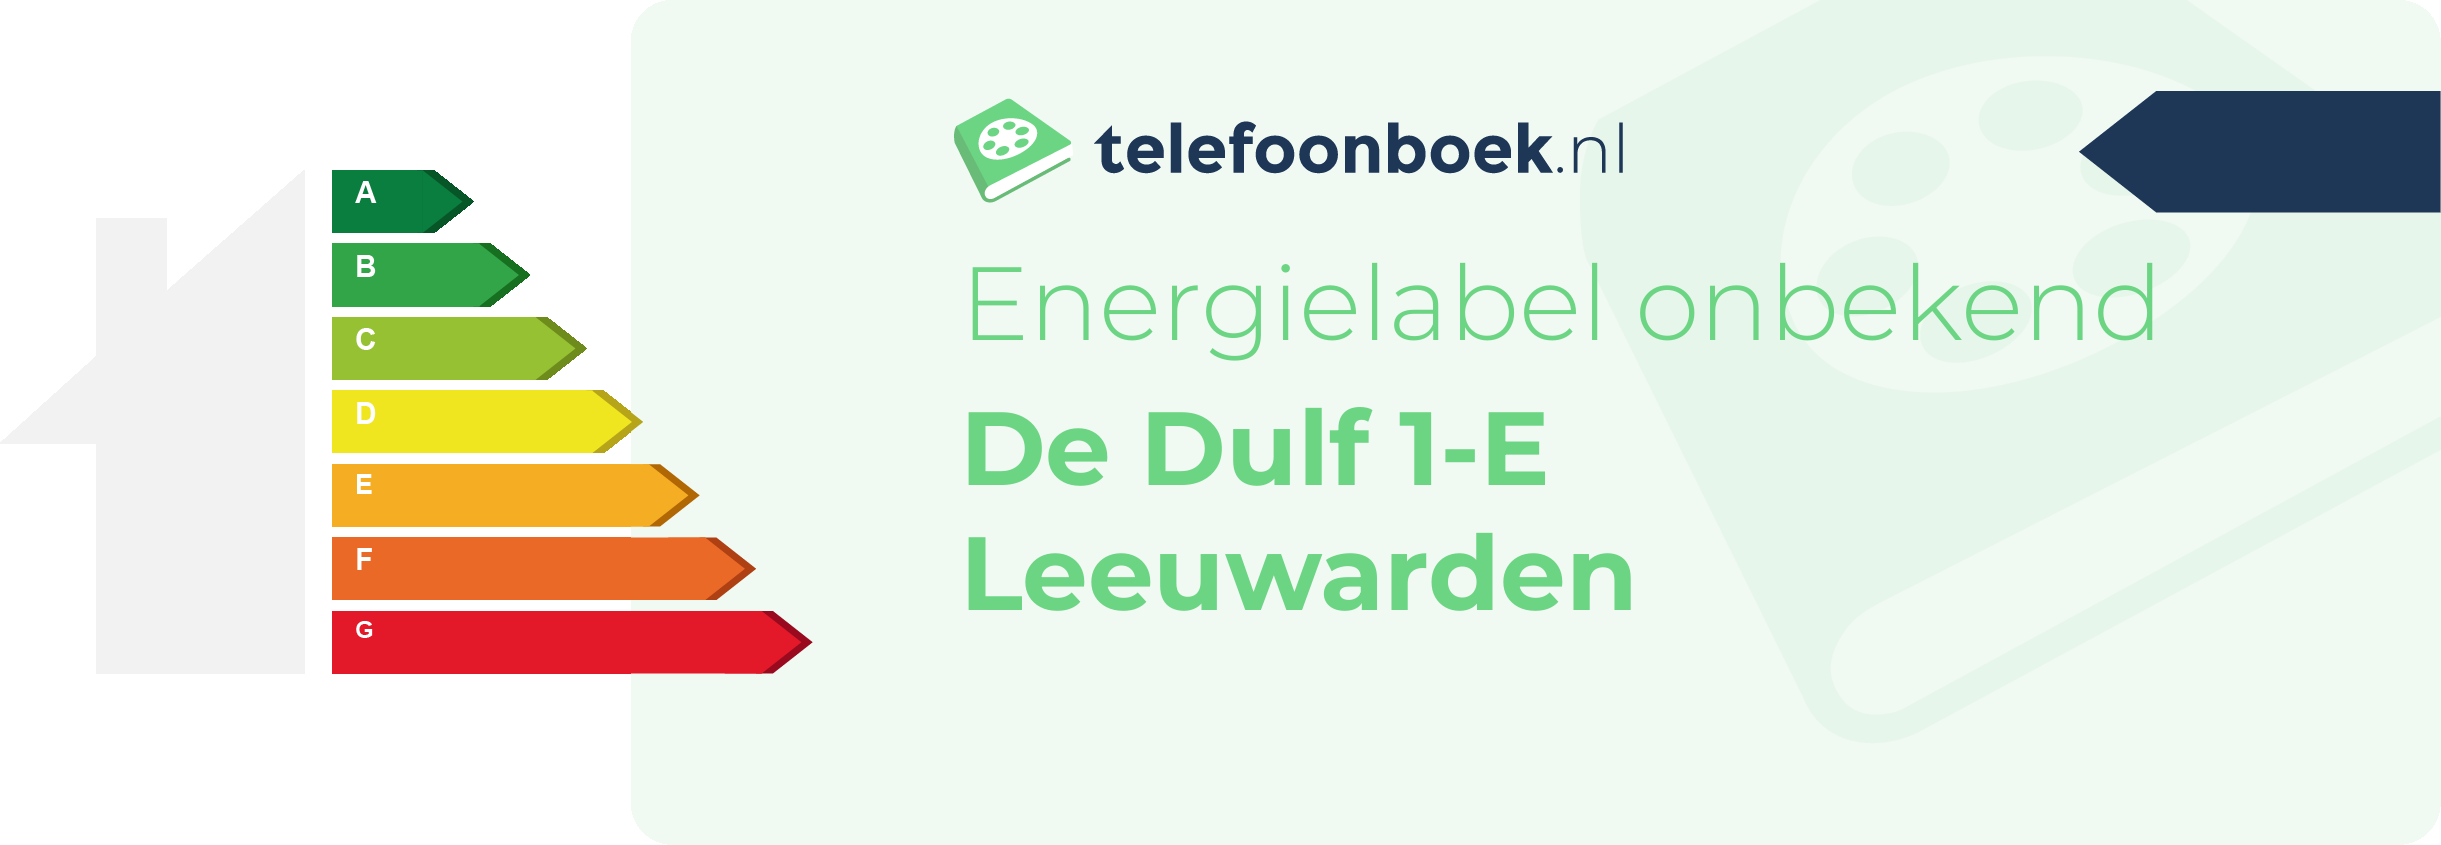 Energielabel De Dulf 1-E Leeuwarden